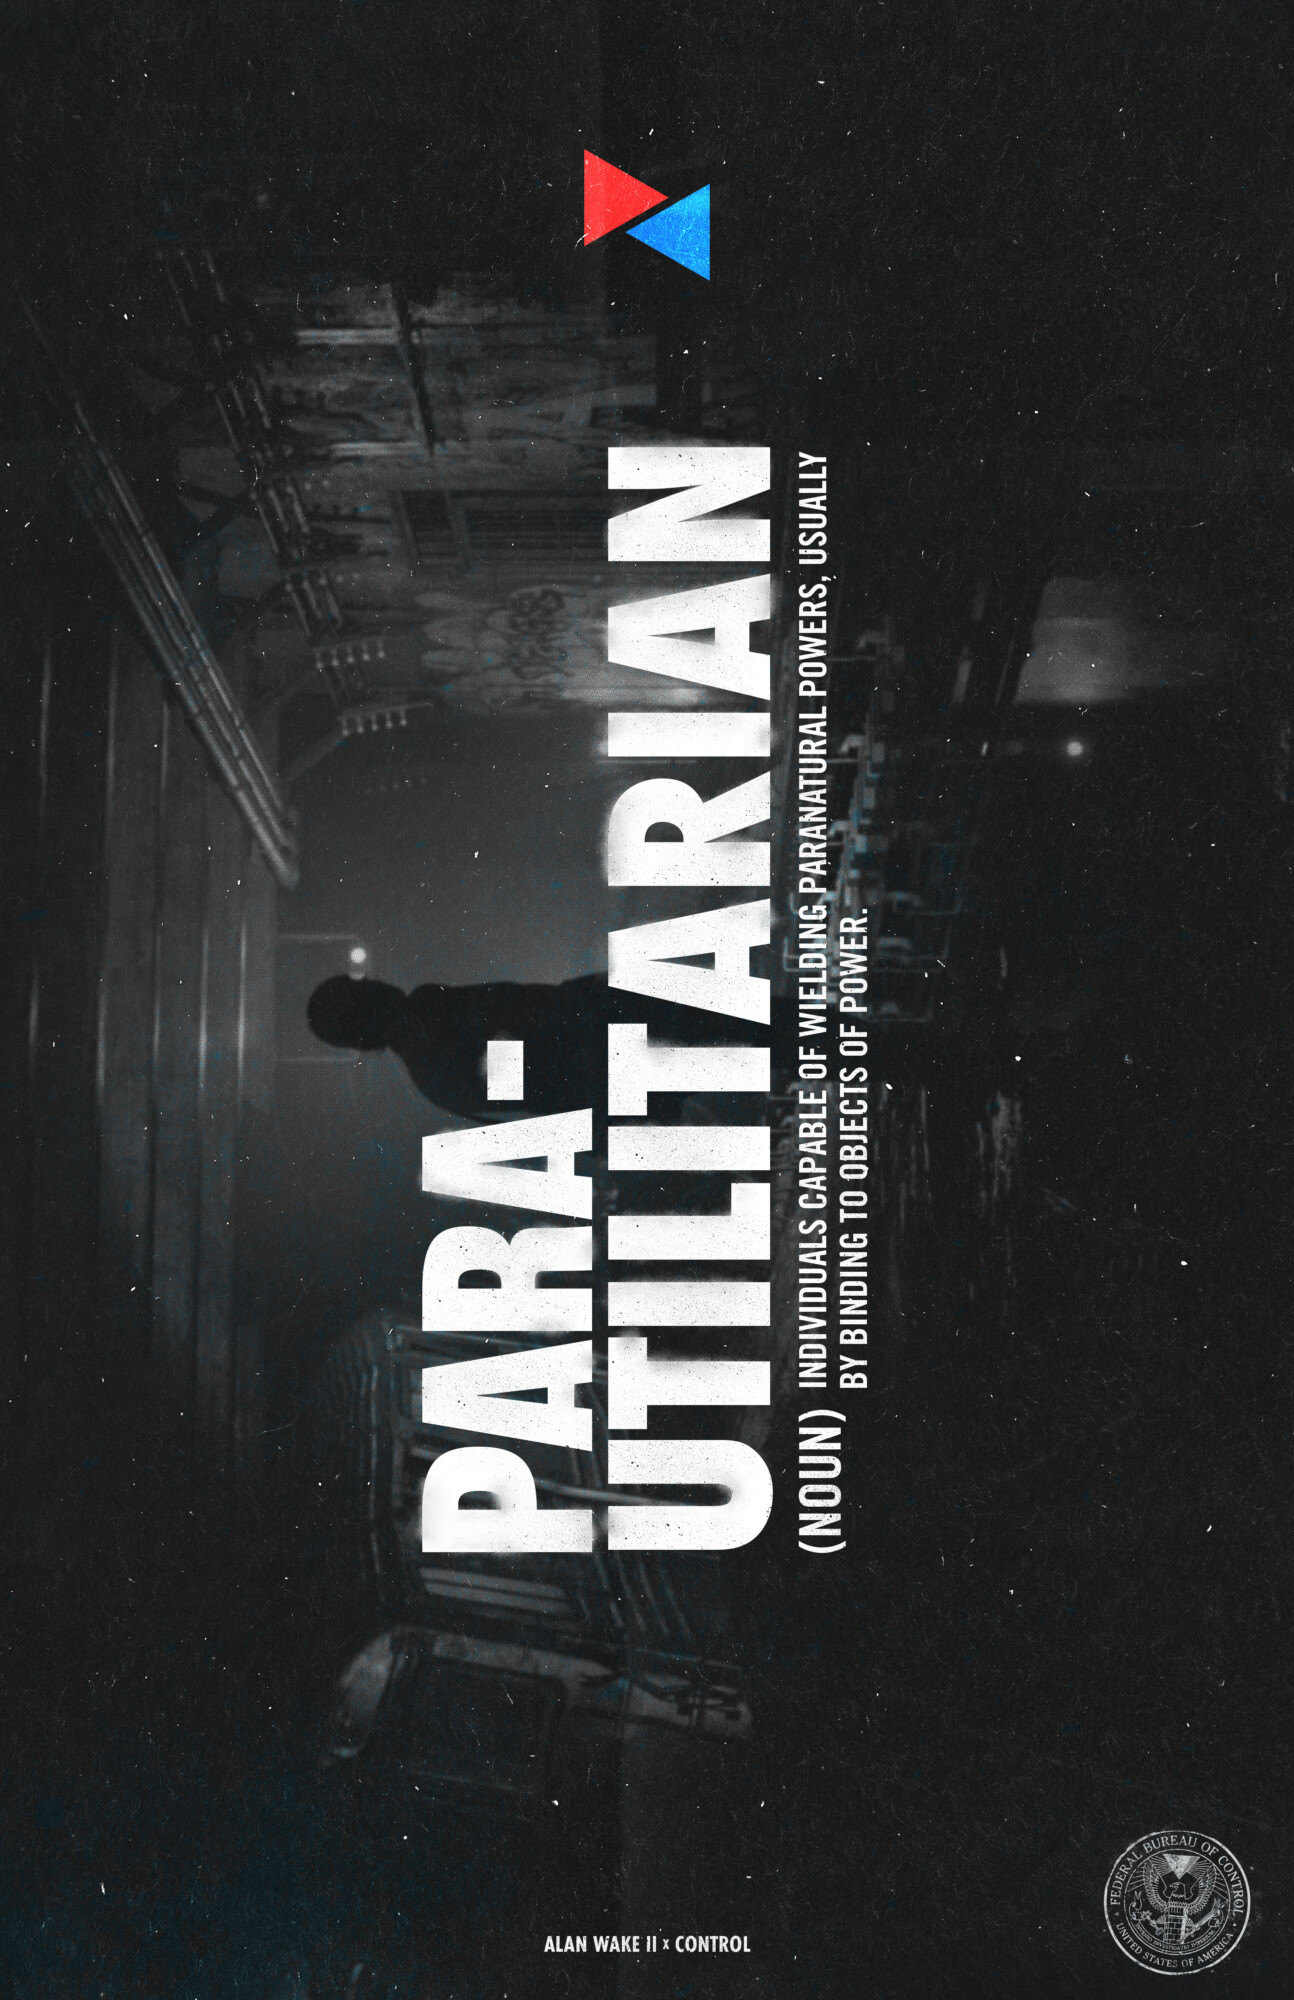 Parautilitarian (Alan Wake 2)